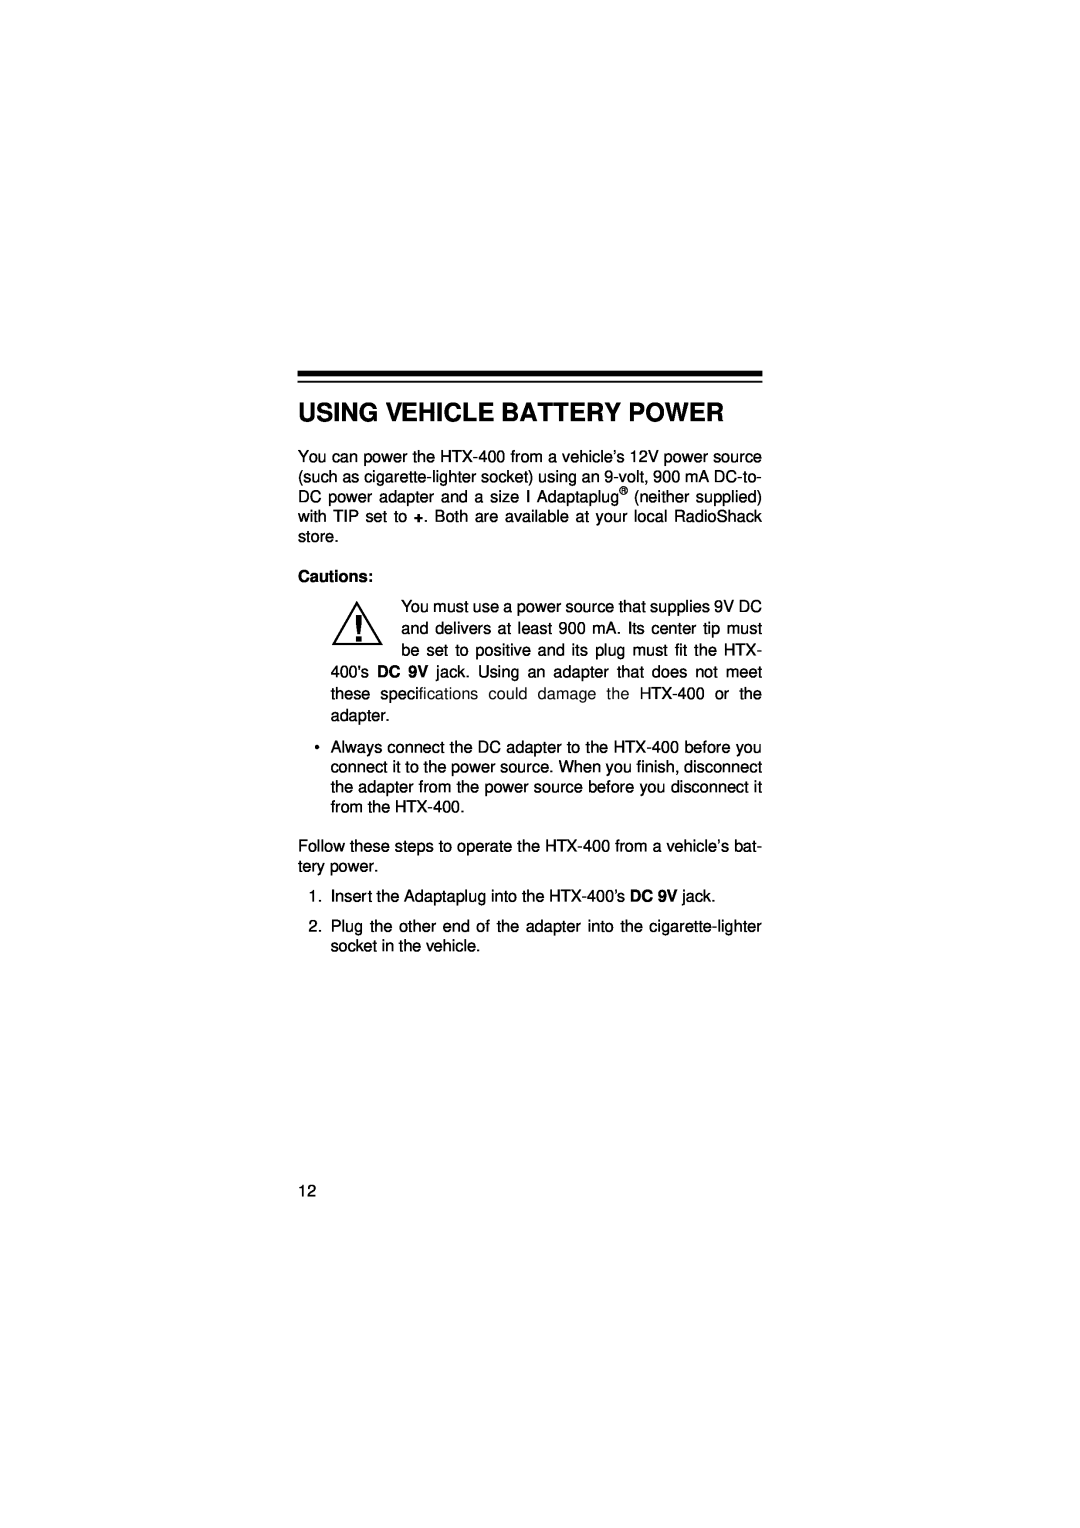 Radio Shack HTX-400 owner manual Using Vehicle Battery Power 